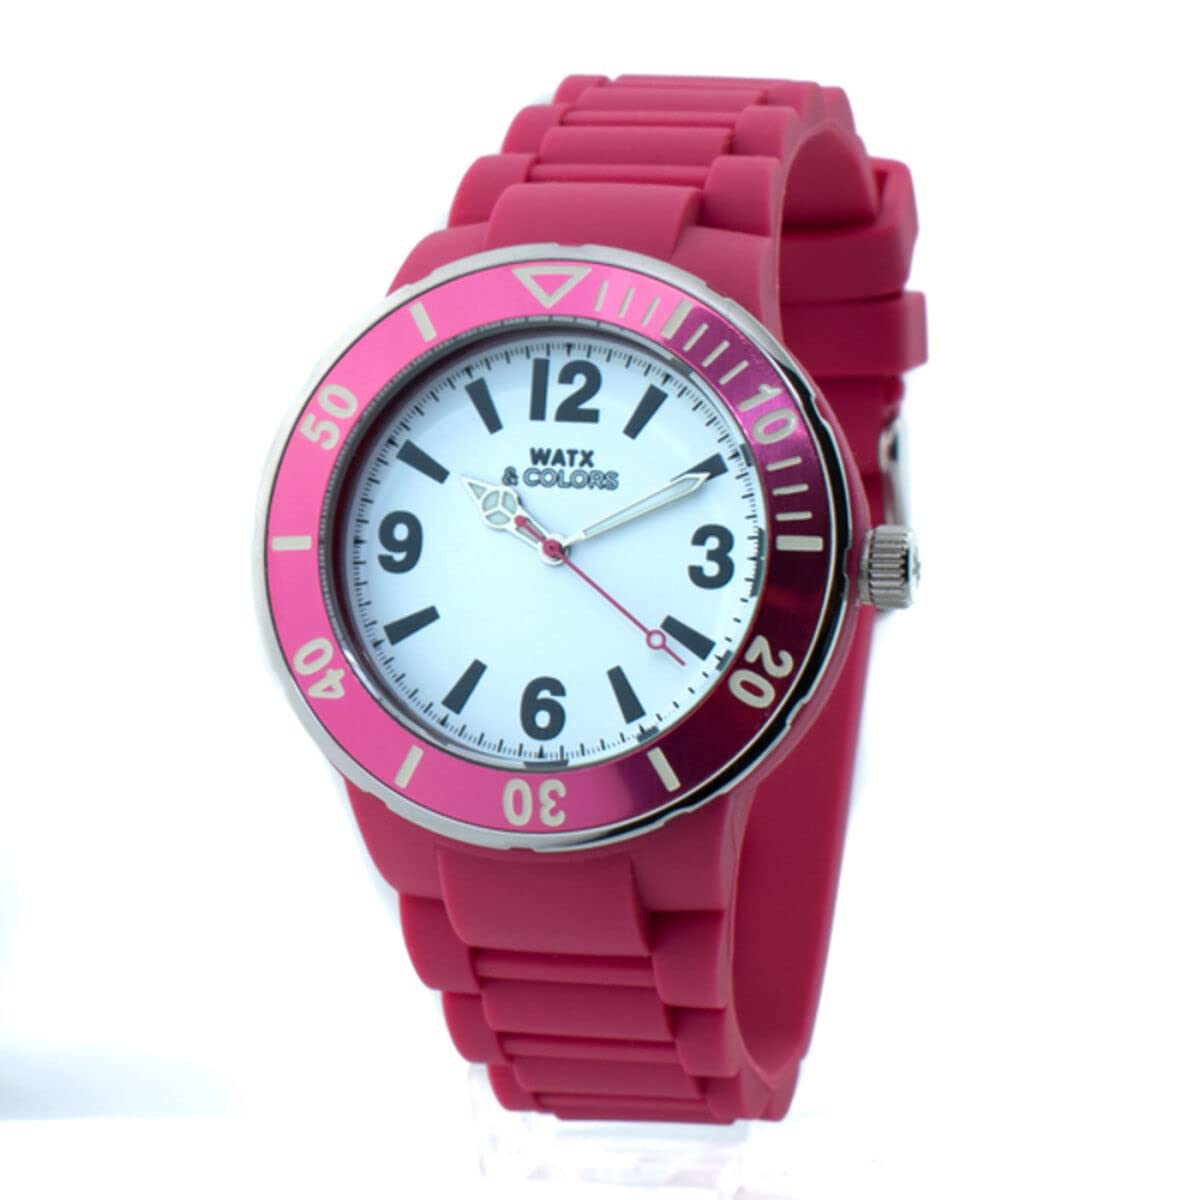 RWA1623-C1521 Watch WATX Acetate White Pink Unisex - Men and Women